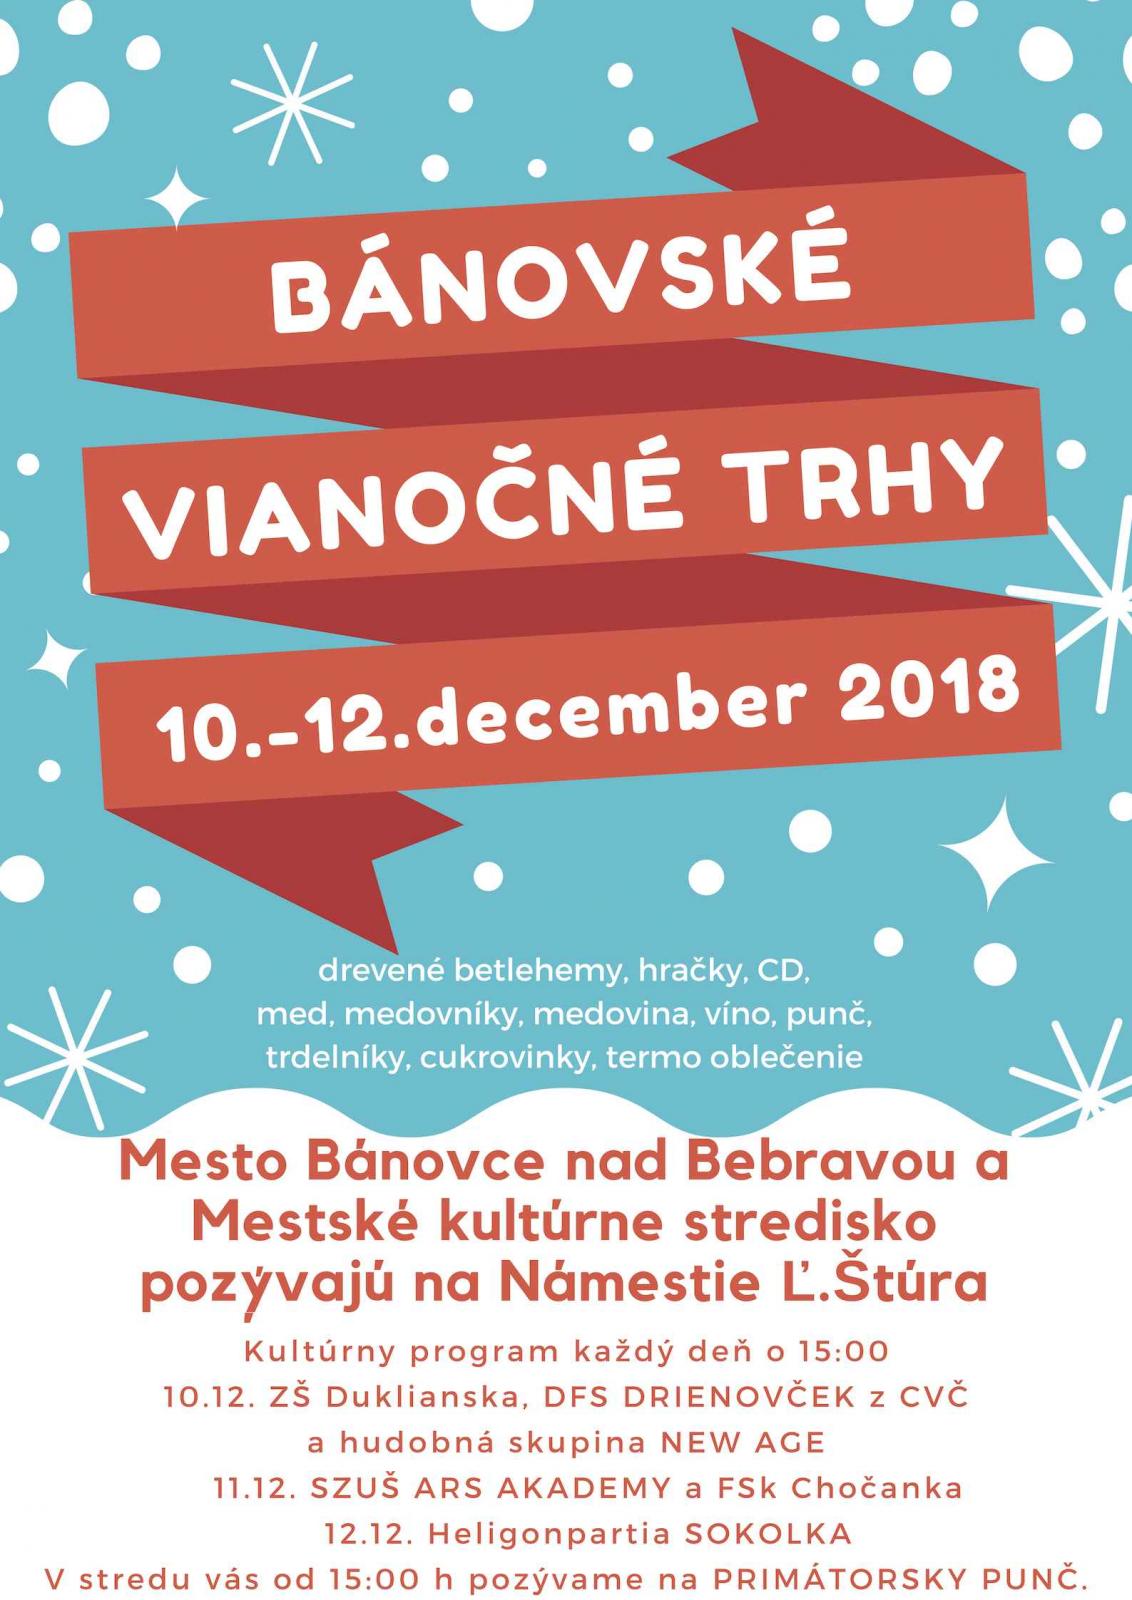 Bnovsk vianon trhy 2018 Bnovce nad Bebravou  